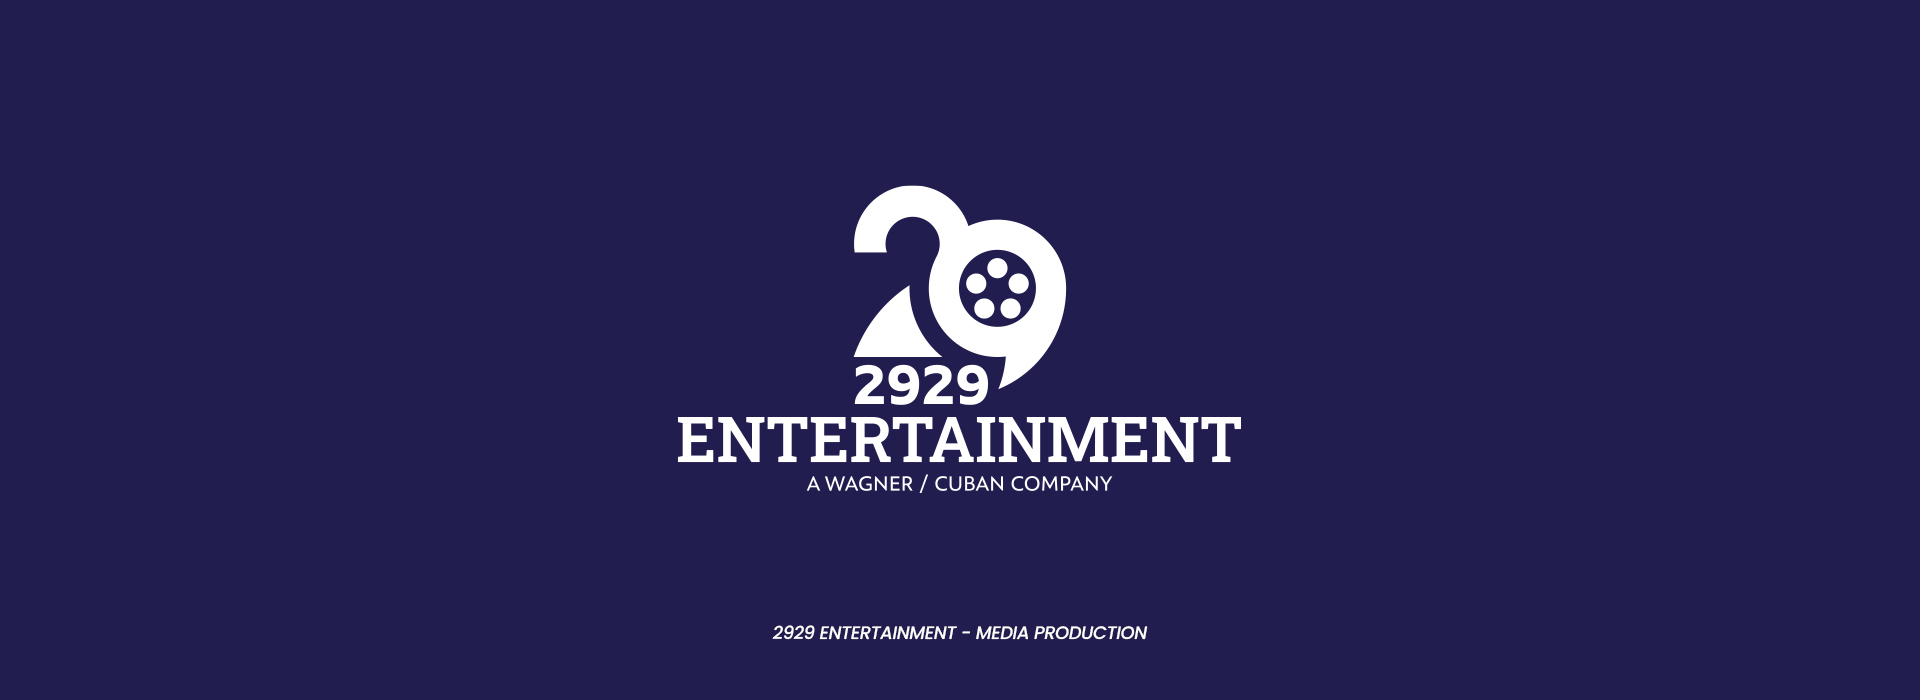 2929 Entertainment - Media Wall Street